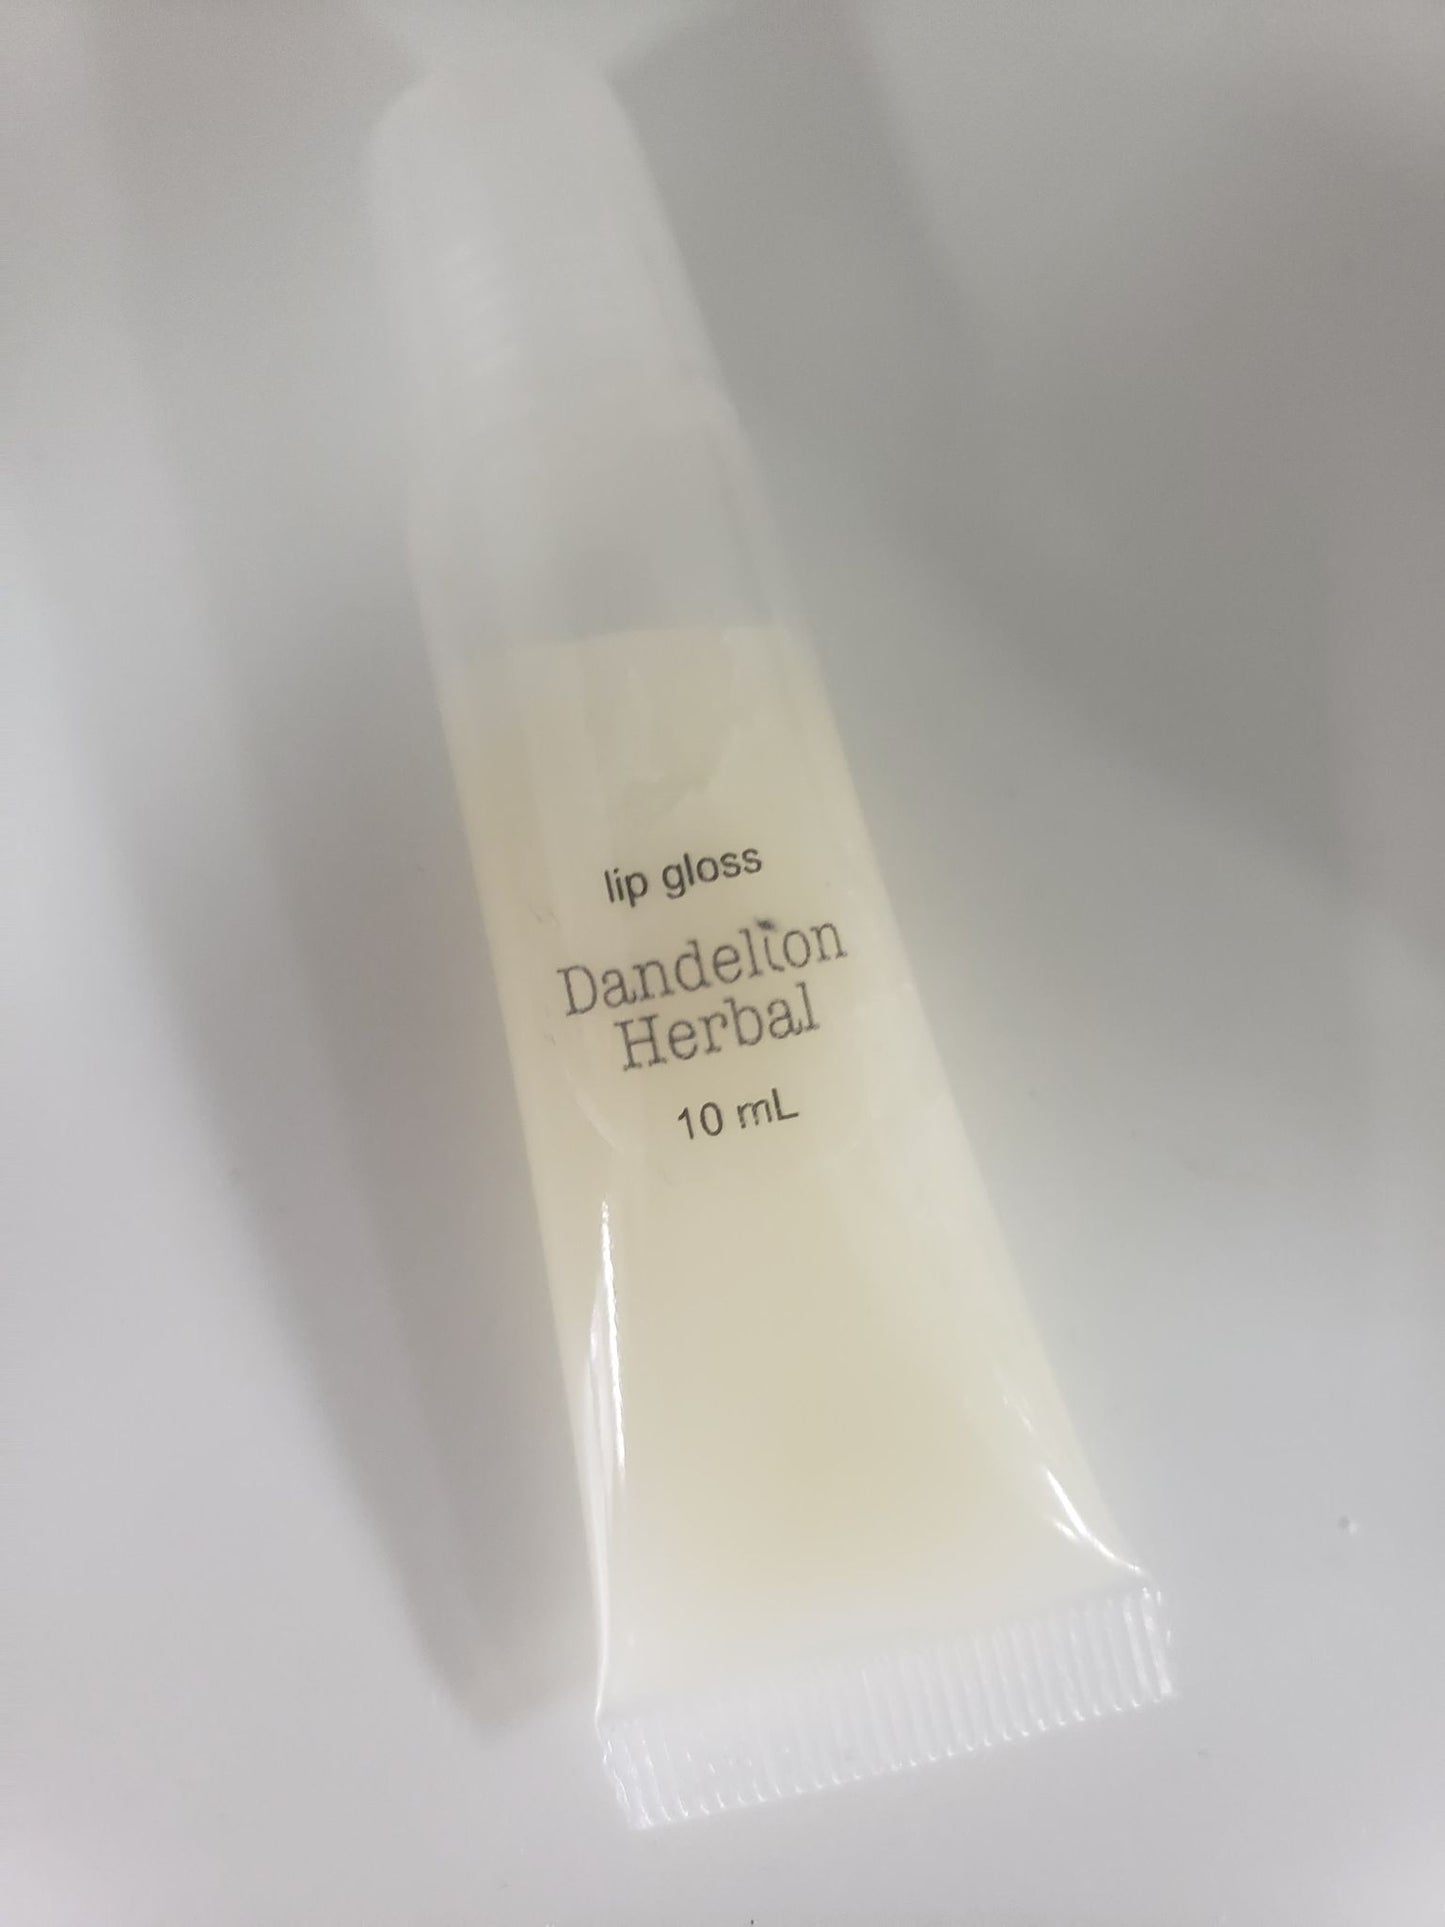 Dandelion Herbal - Lip Gloss